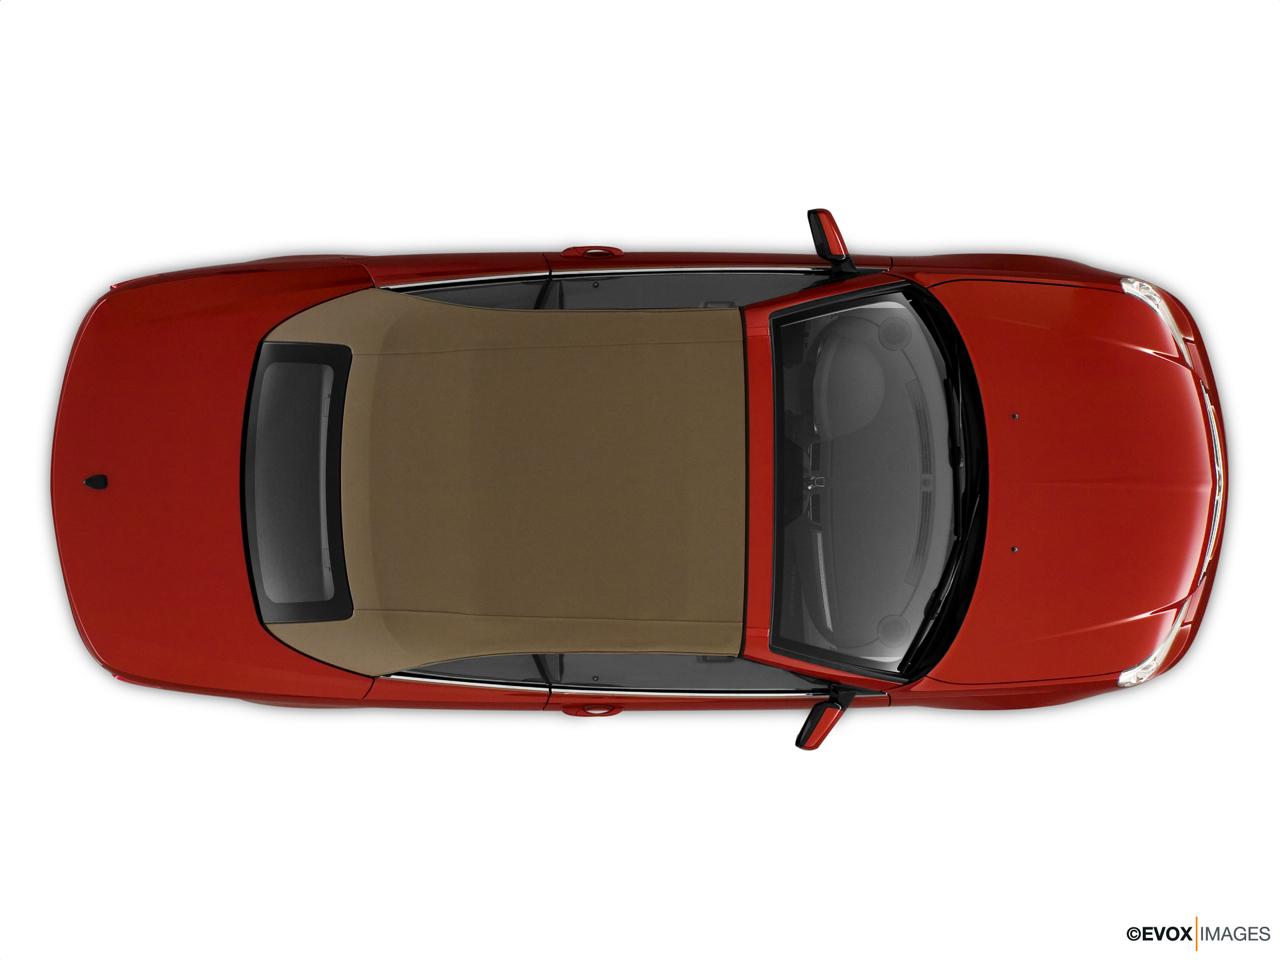 2010 Chrysler Sebring Touring Convertible overhead (top up) 